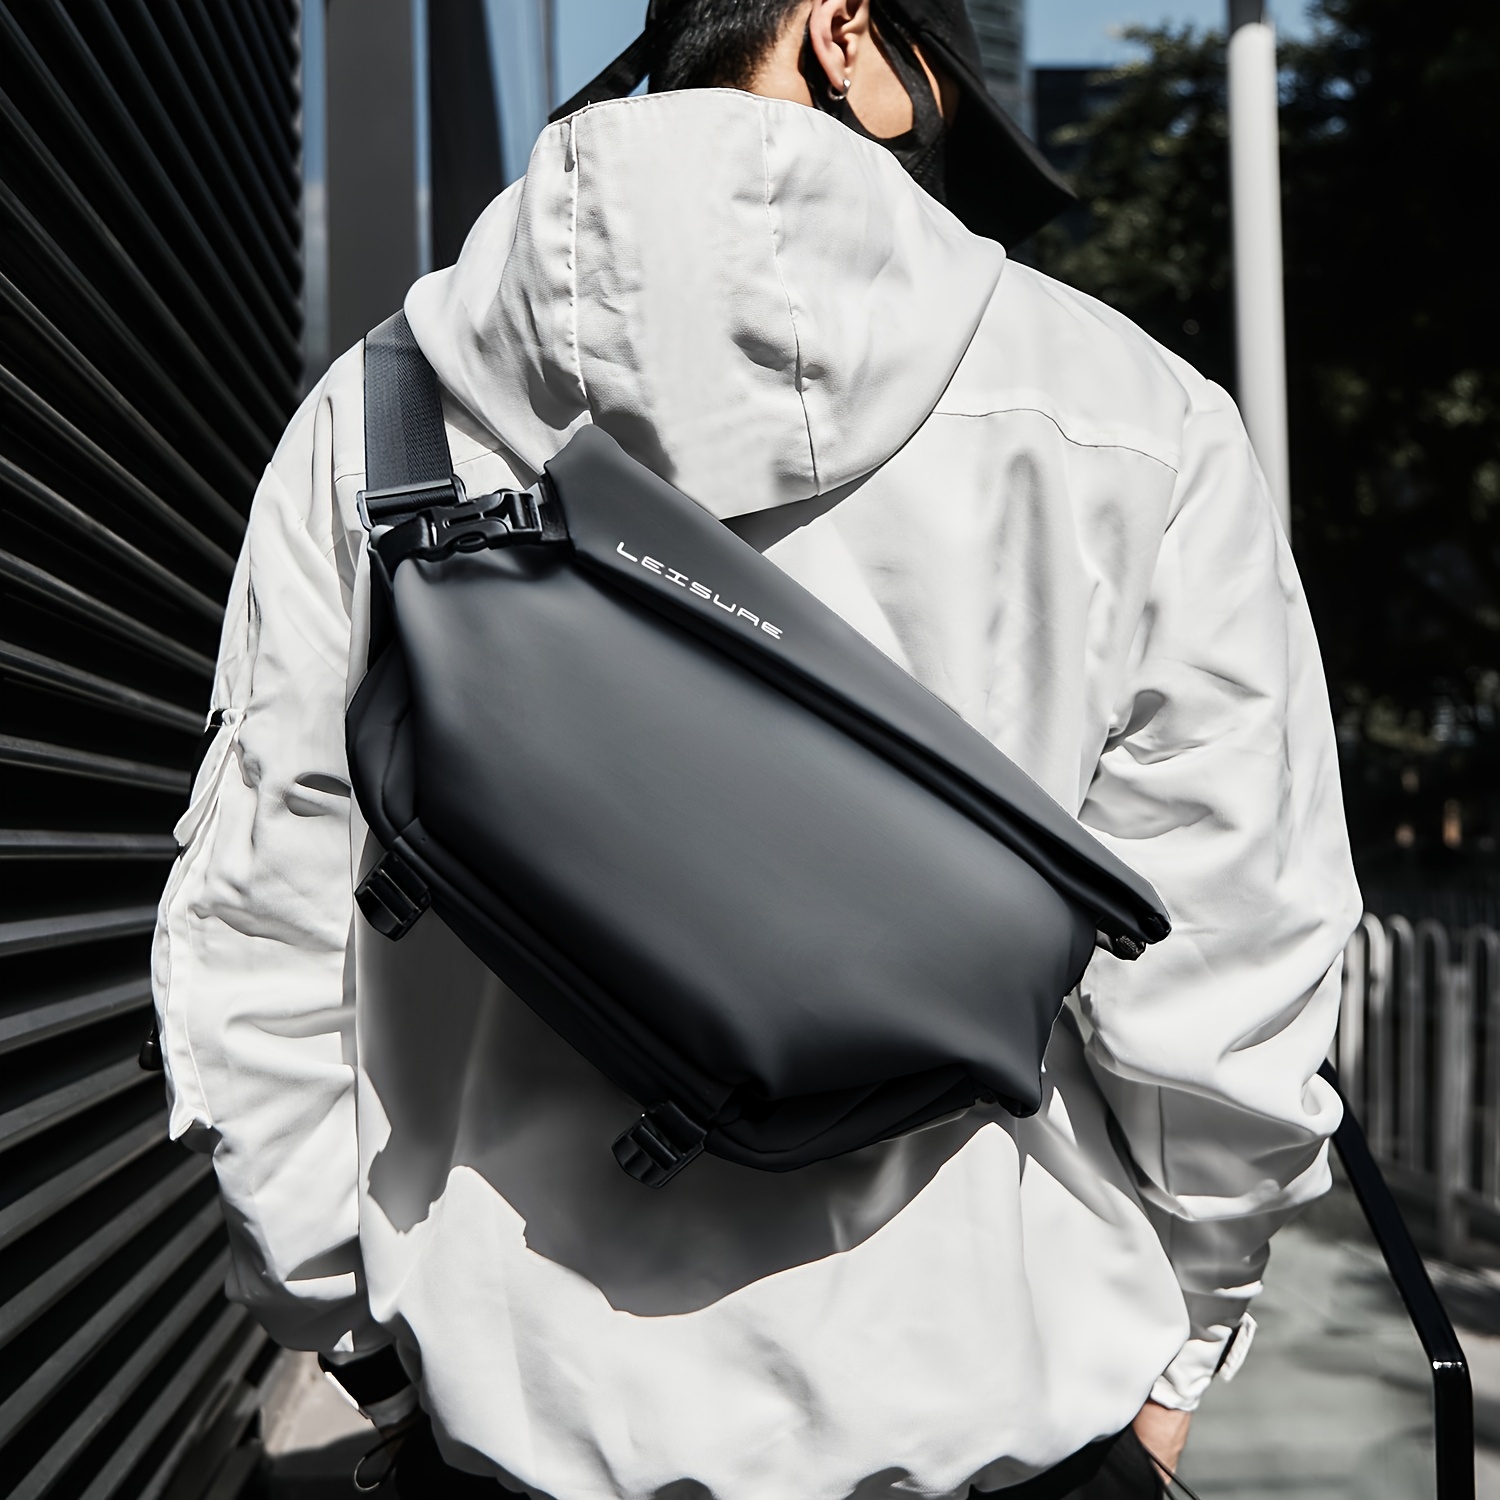 Small Men's Waterproof Messenger Bag - Ideal Crossbody Sling Purse Handbag  for Work and School - Casual Black Shoulder Bag